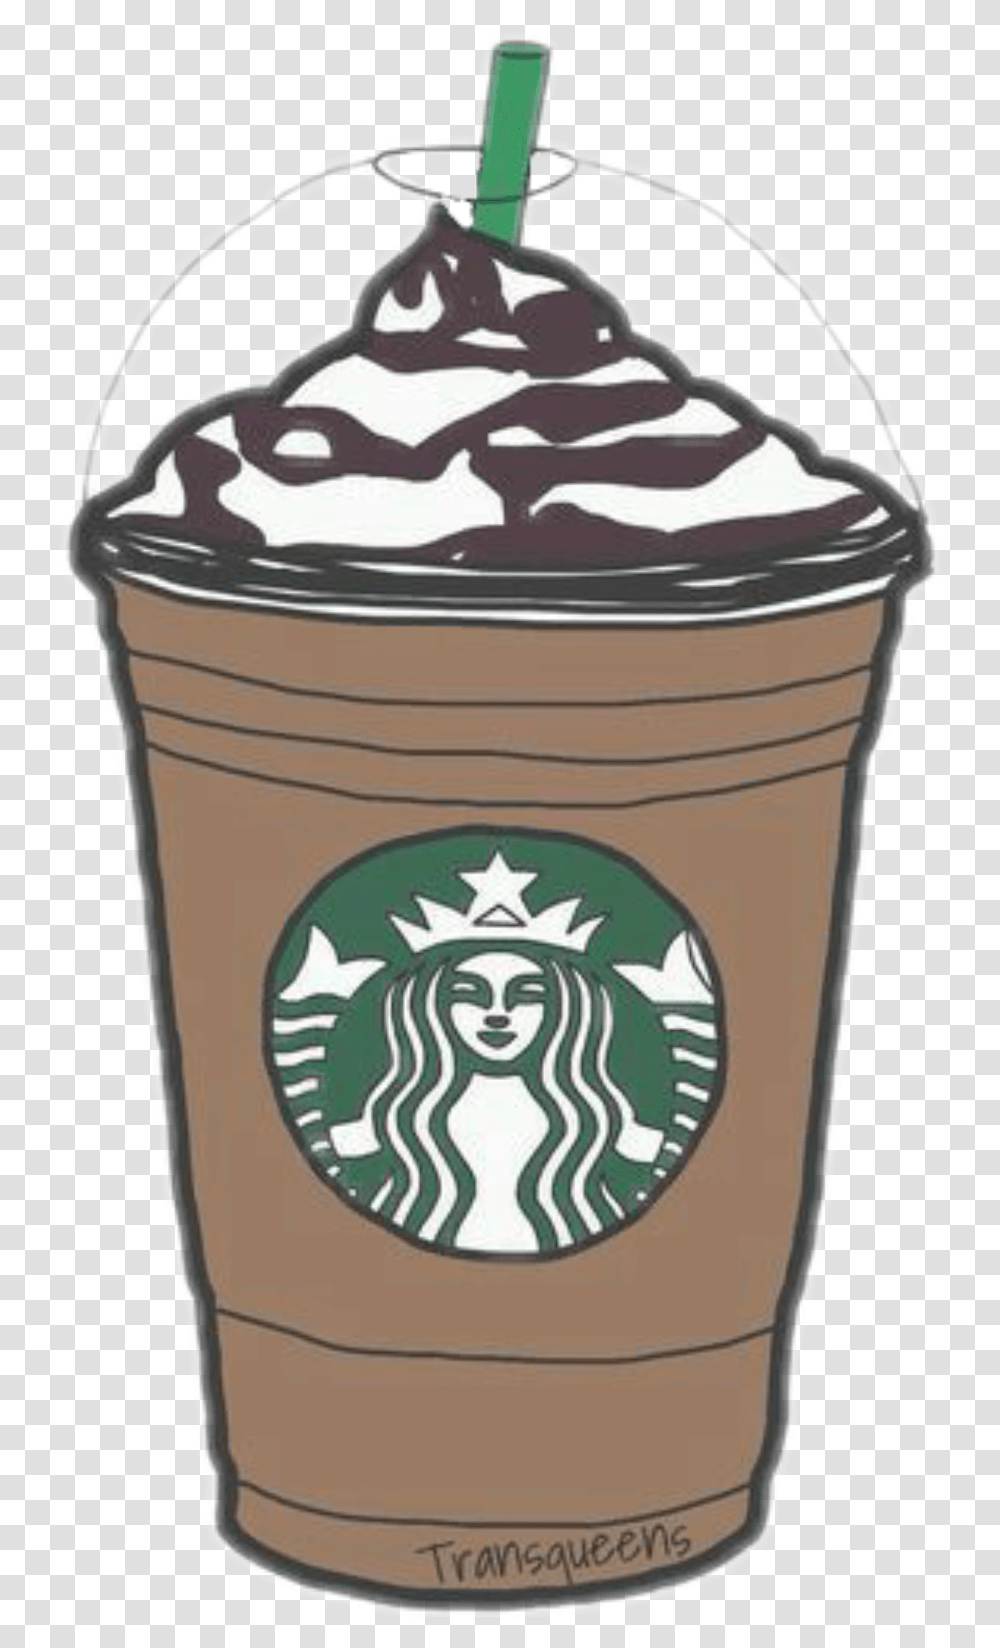 Tumblr Starbucks Tumblr Redbubble Stickers Starbucks, Dessert, Food, Coffee Cup, Sweets Transparent Png